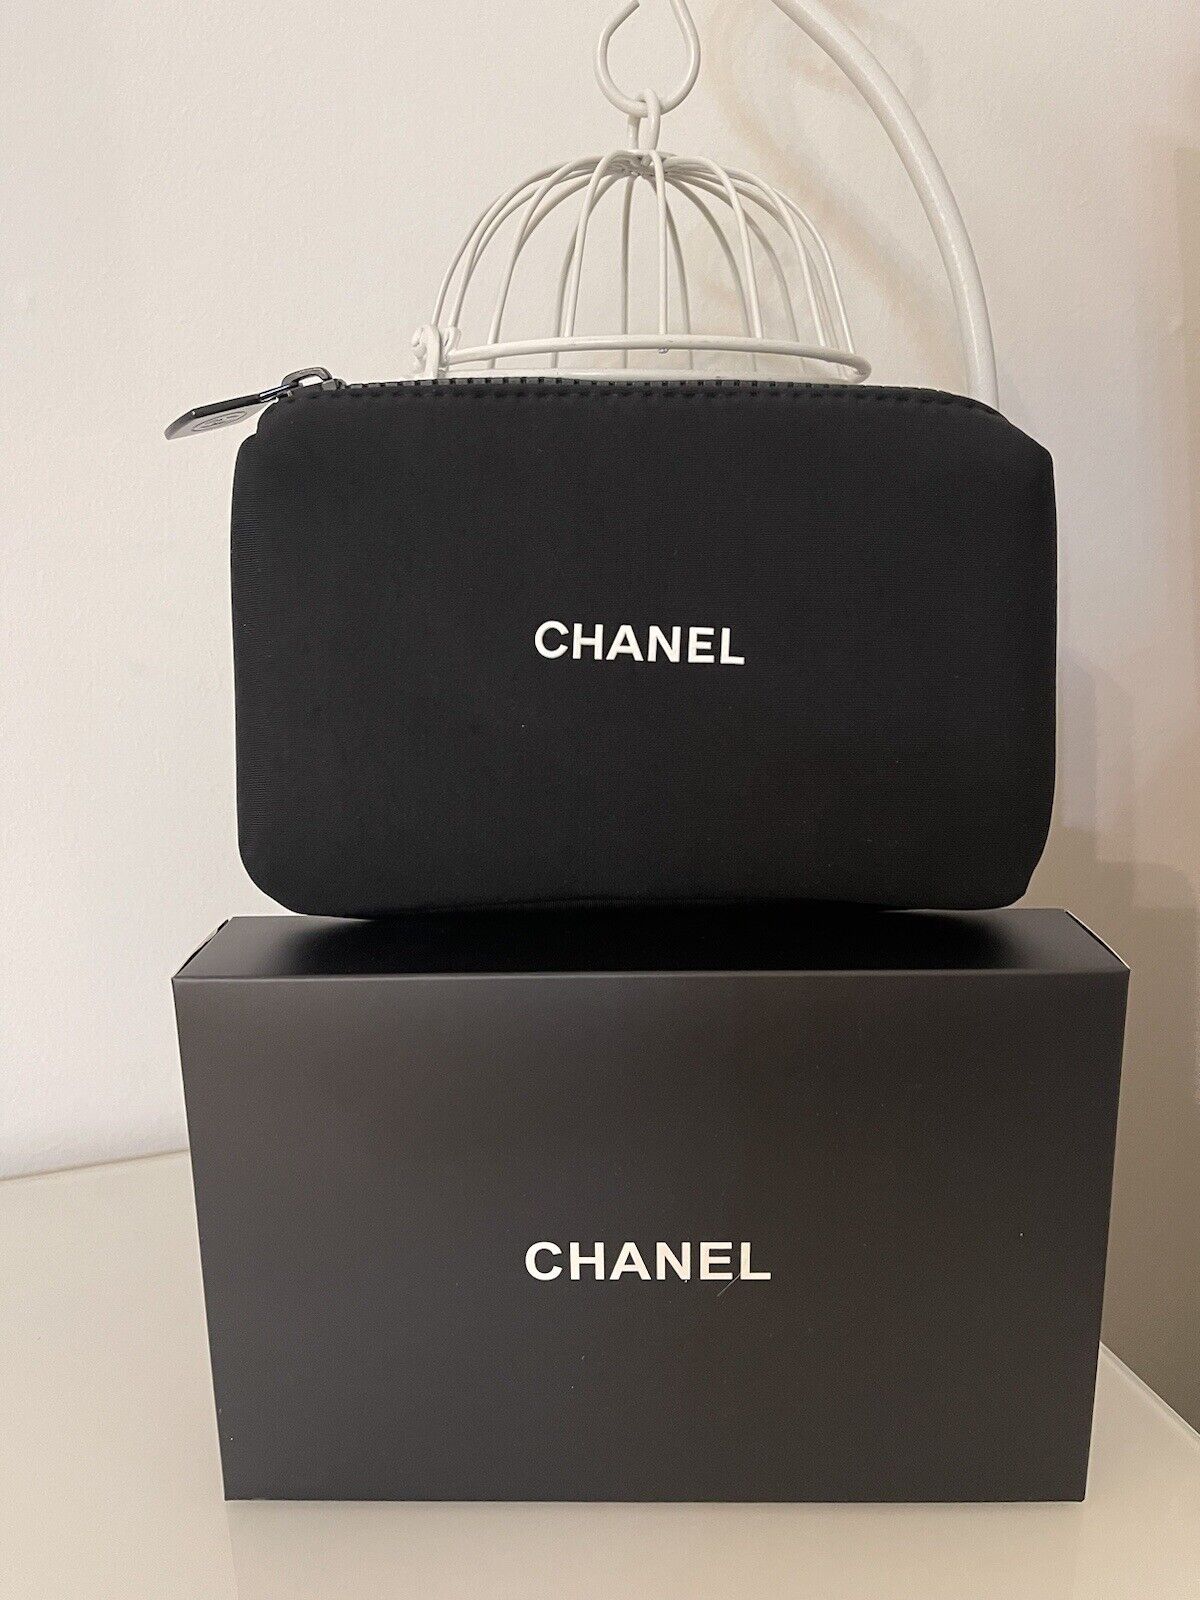 Chanel Makeup Kosmetiktasche Reisetasche Limitiert